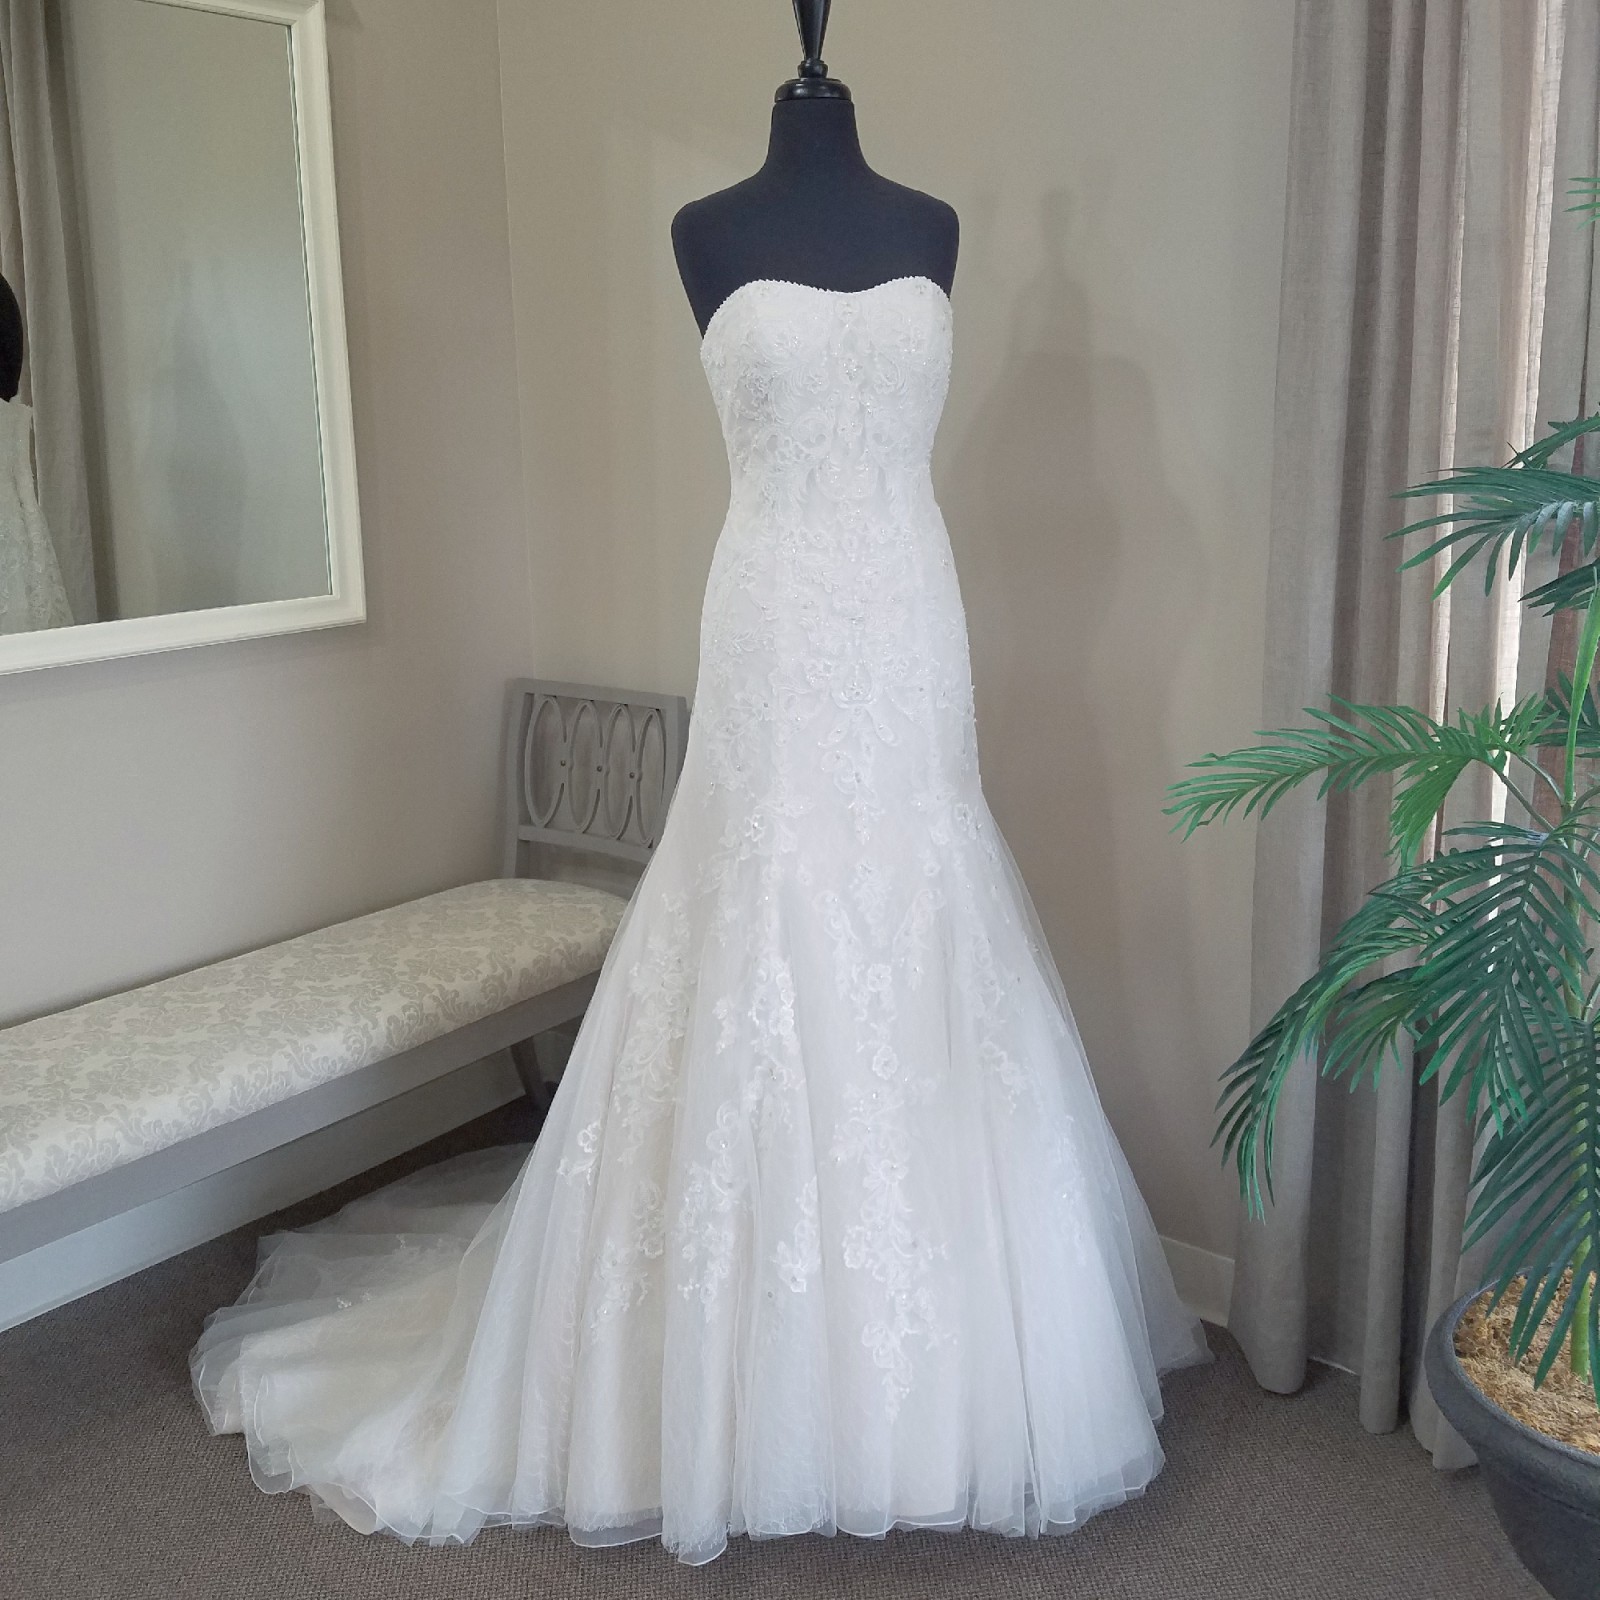 Pronovias Zoila, St. Patrick New Wedding Dress Save 84% - Stillwhite